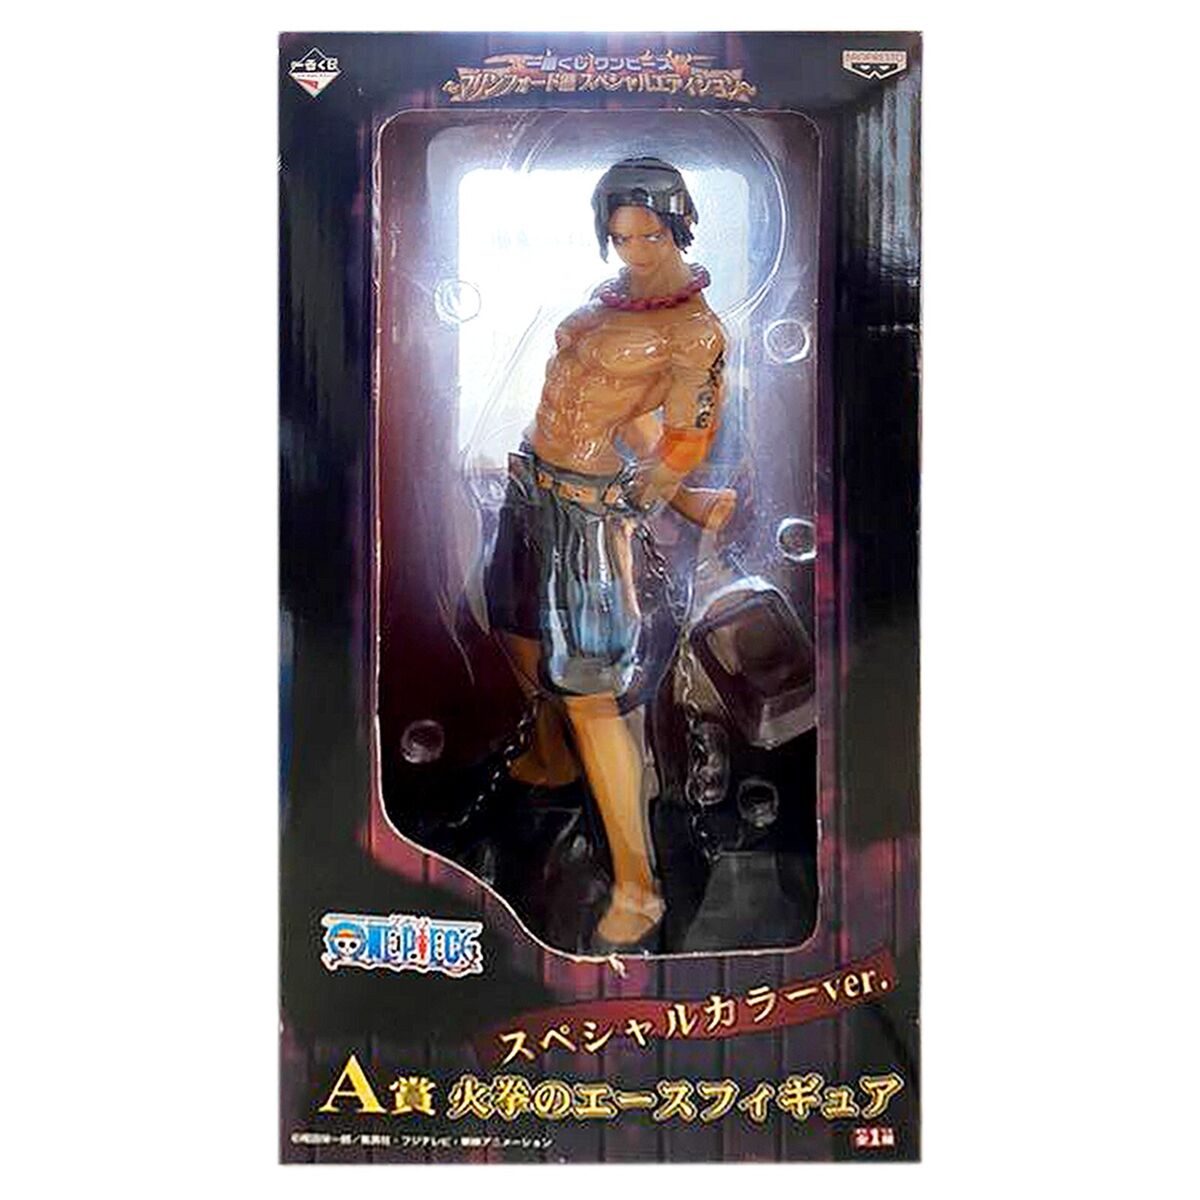 Portgas D. Ace Figure, Ichiban Kuji A Prize, One Piece, Bandai